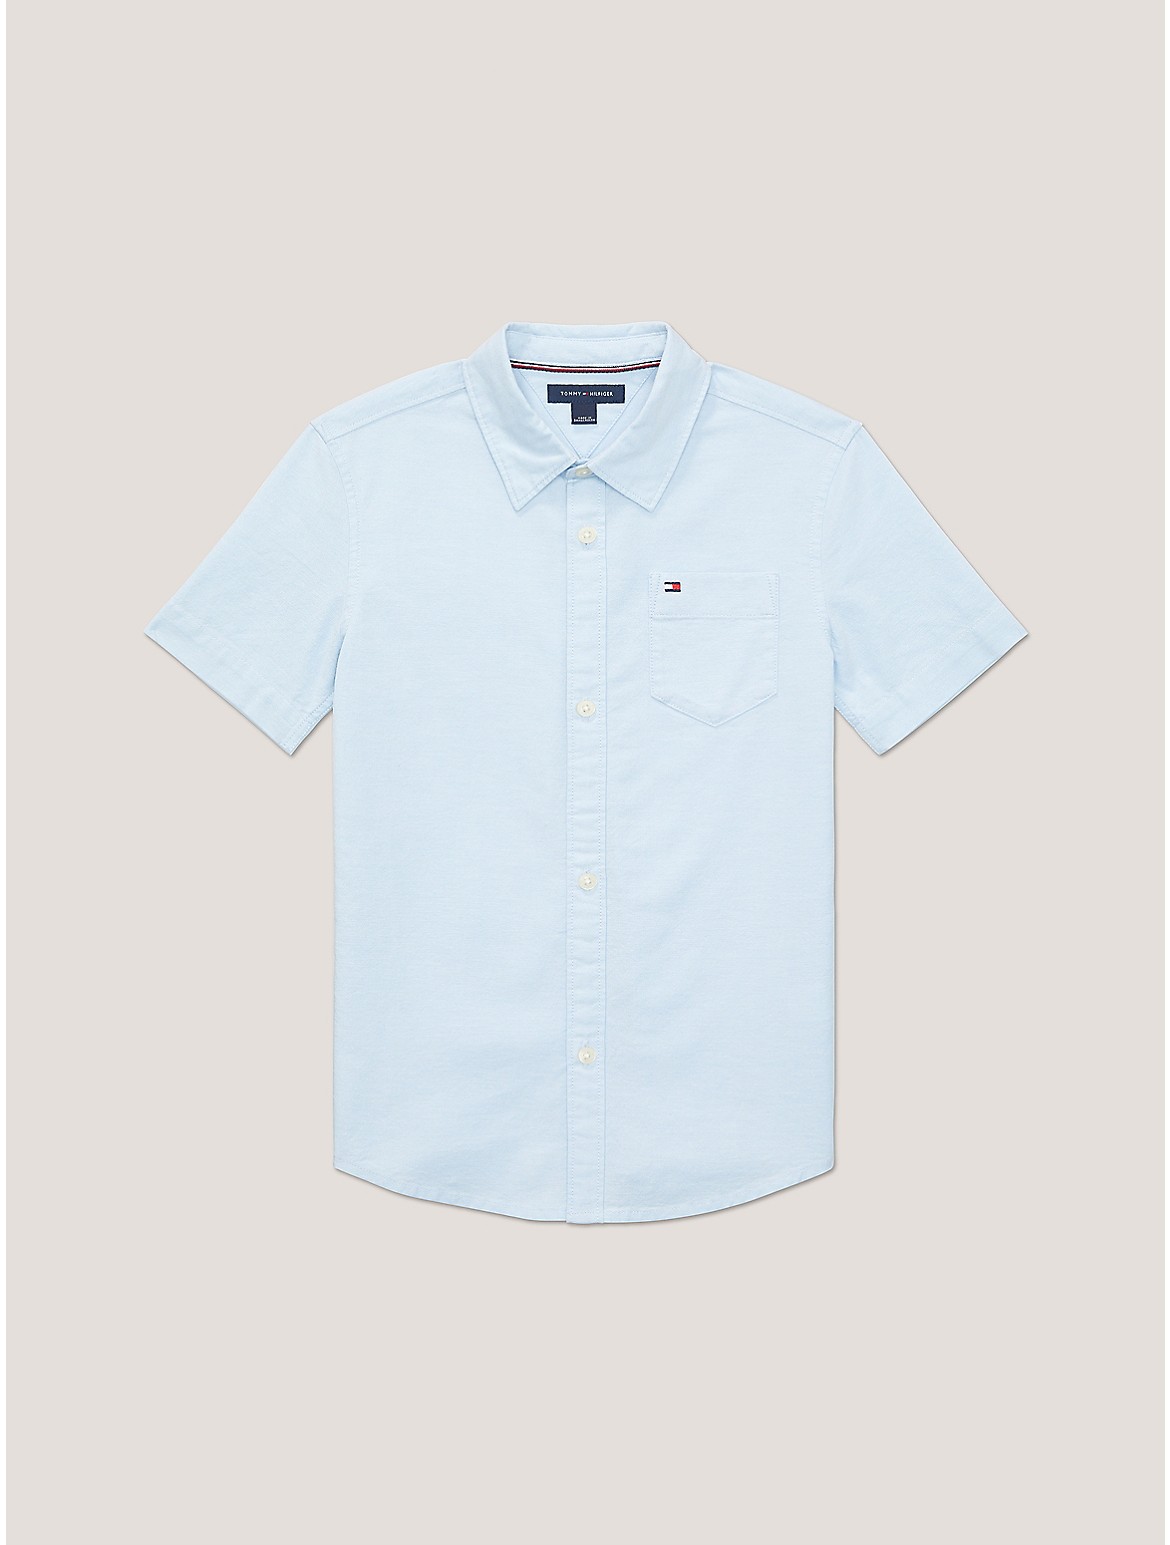 Tommy Hilfiger Boys' Kids' Short-Sleeve Stretch Oxford Shirt - Blue - XS